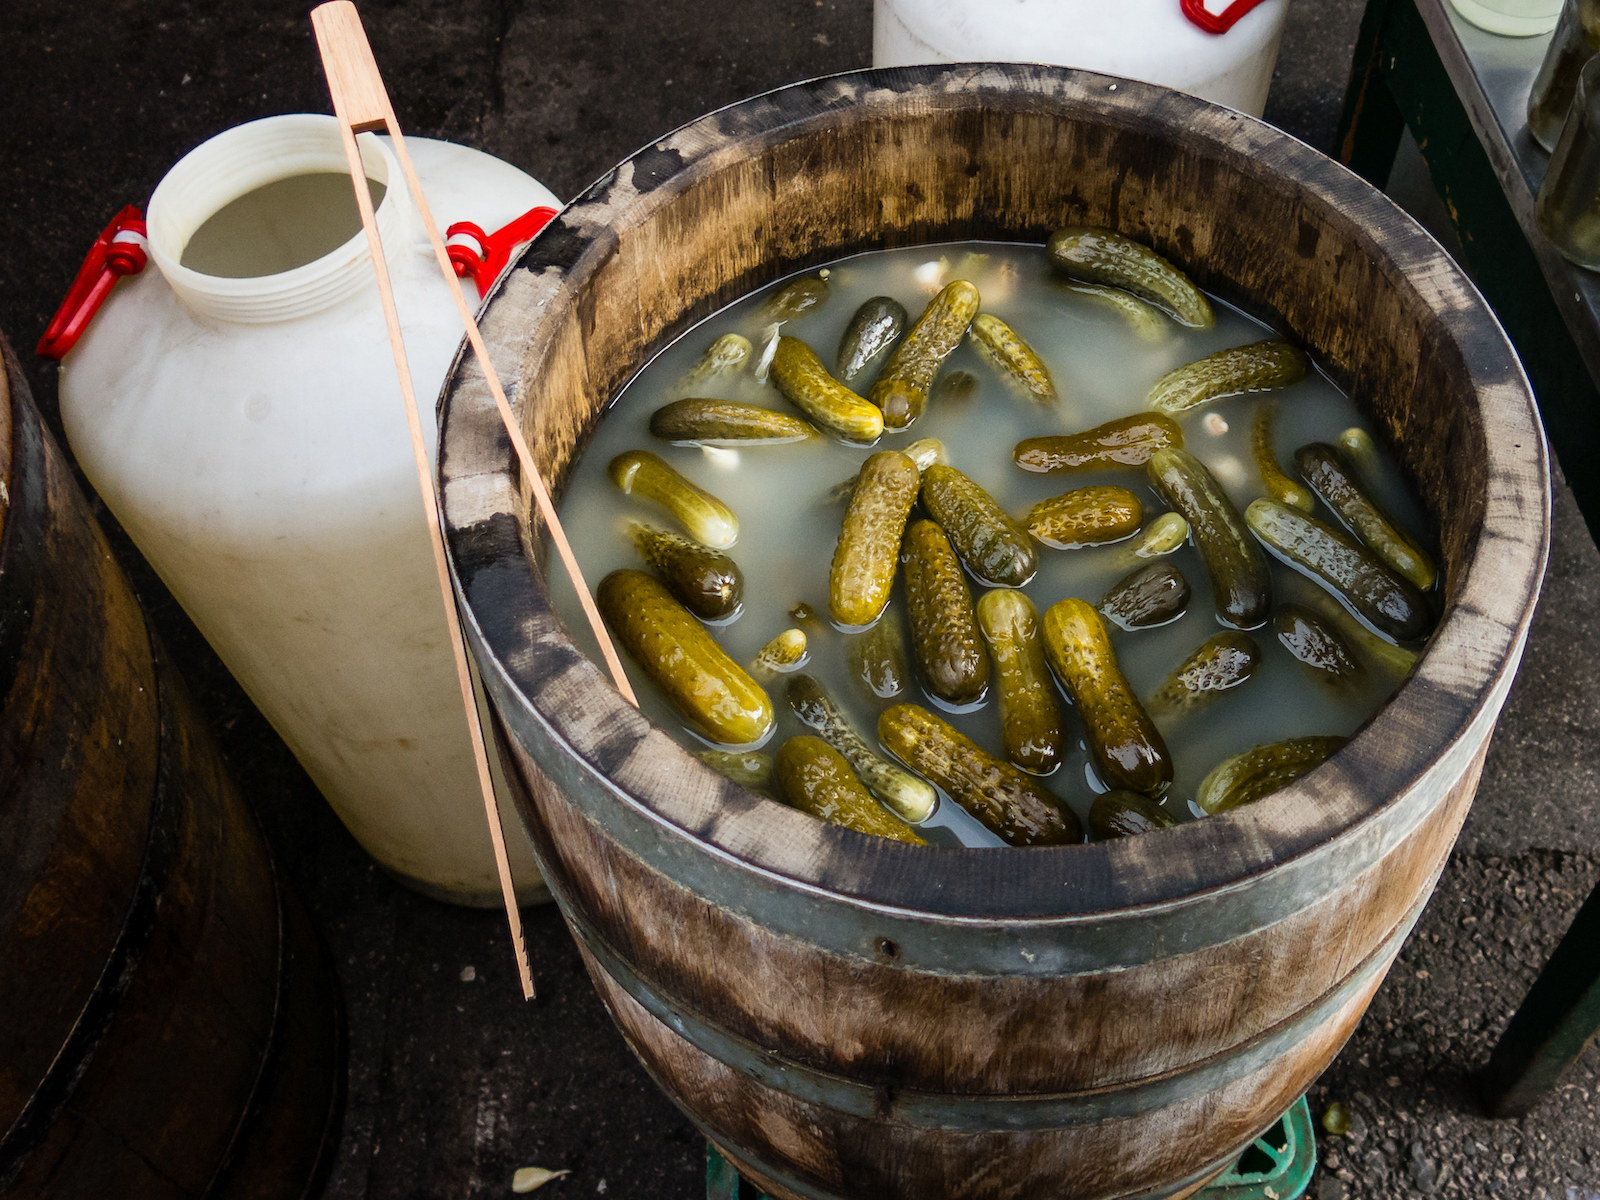 Pickels in brine in a barrel